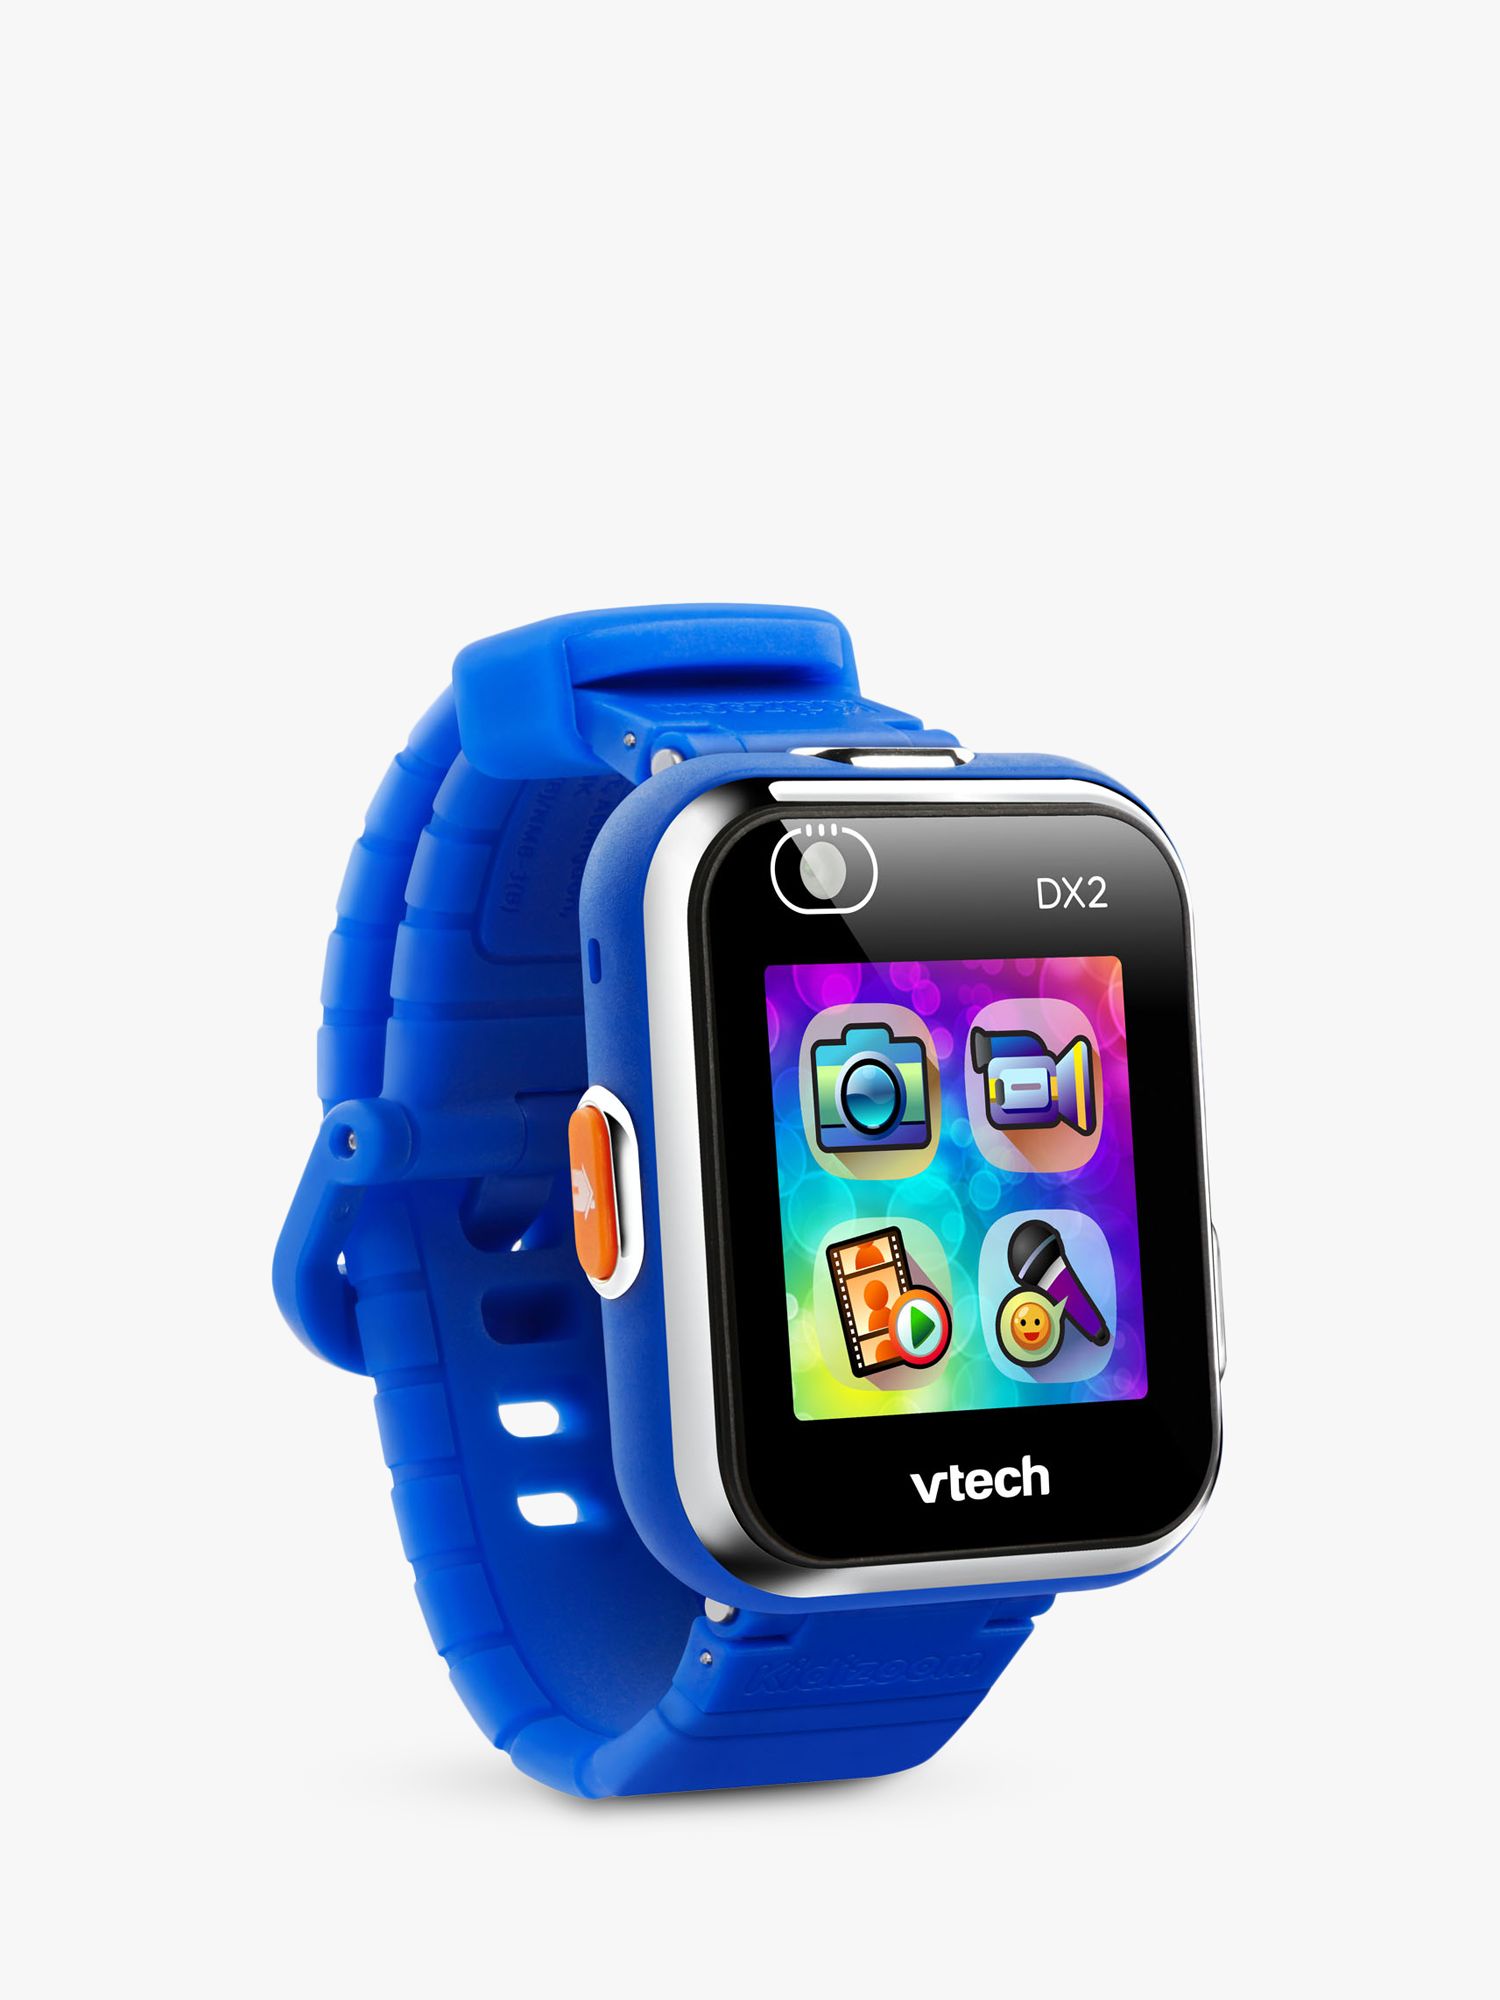 vtech toy watch